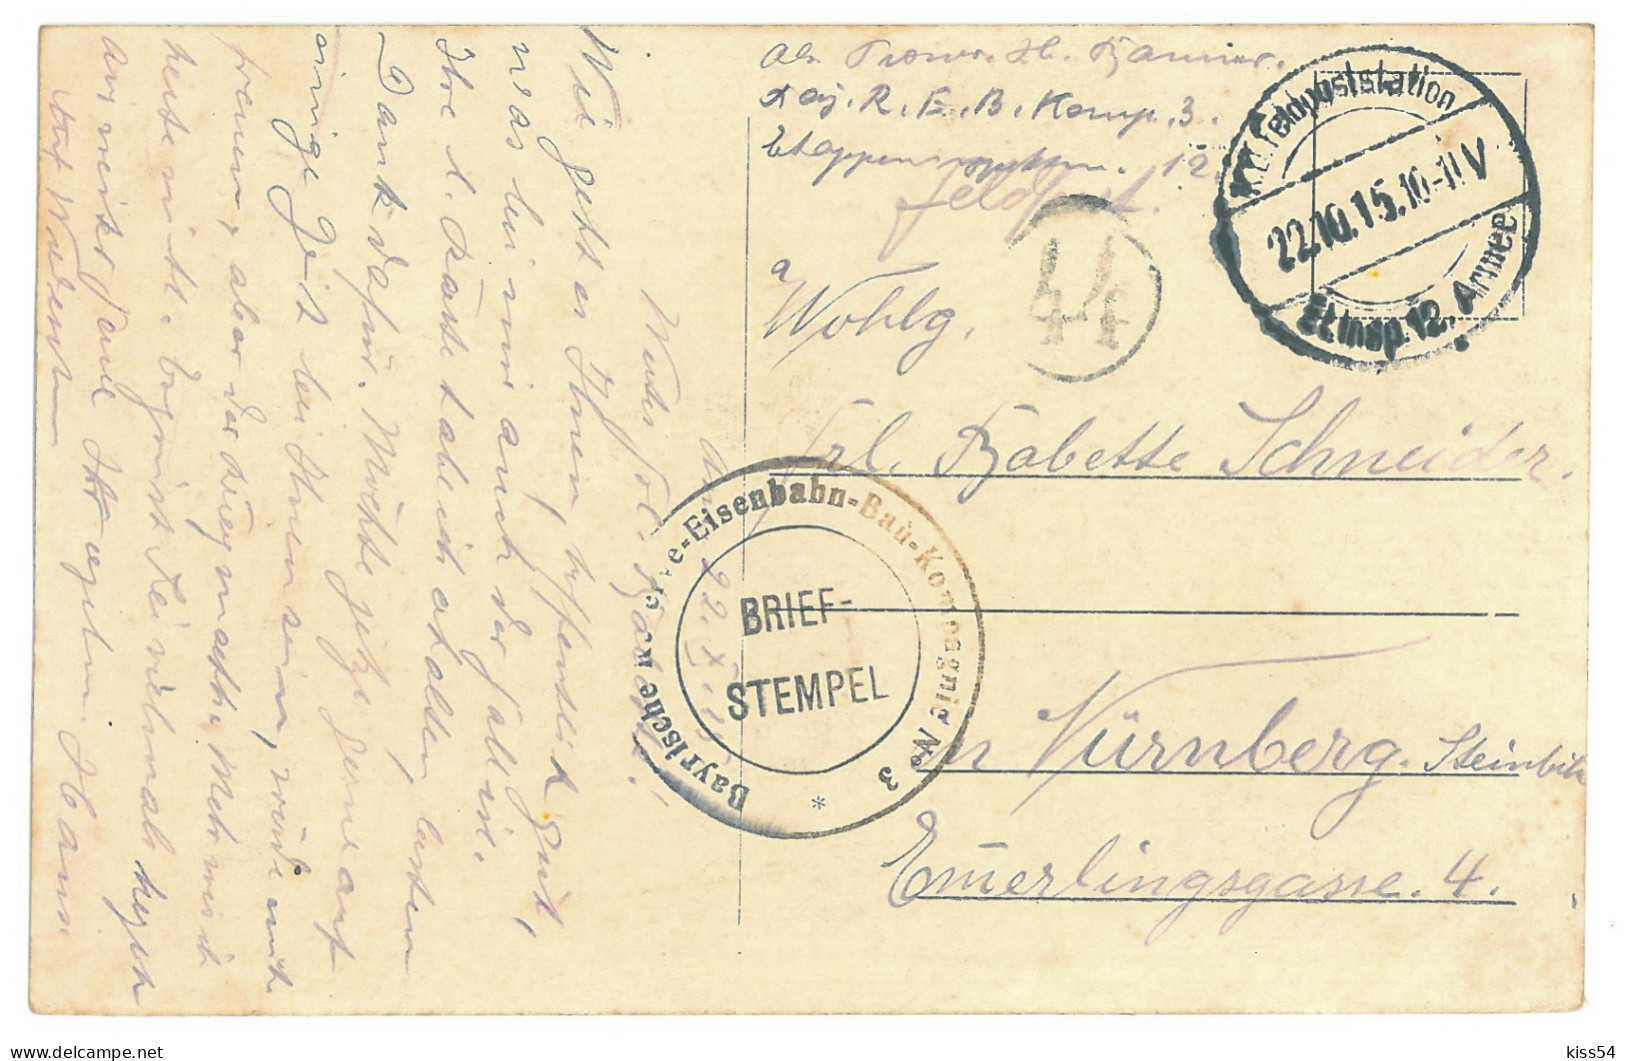 BL 29 - 16201 GRODNO, Belarus - Old Postcard, CENSOR - Used - 1915 - Bielorussia